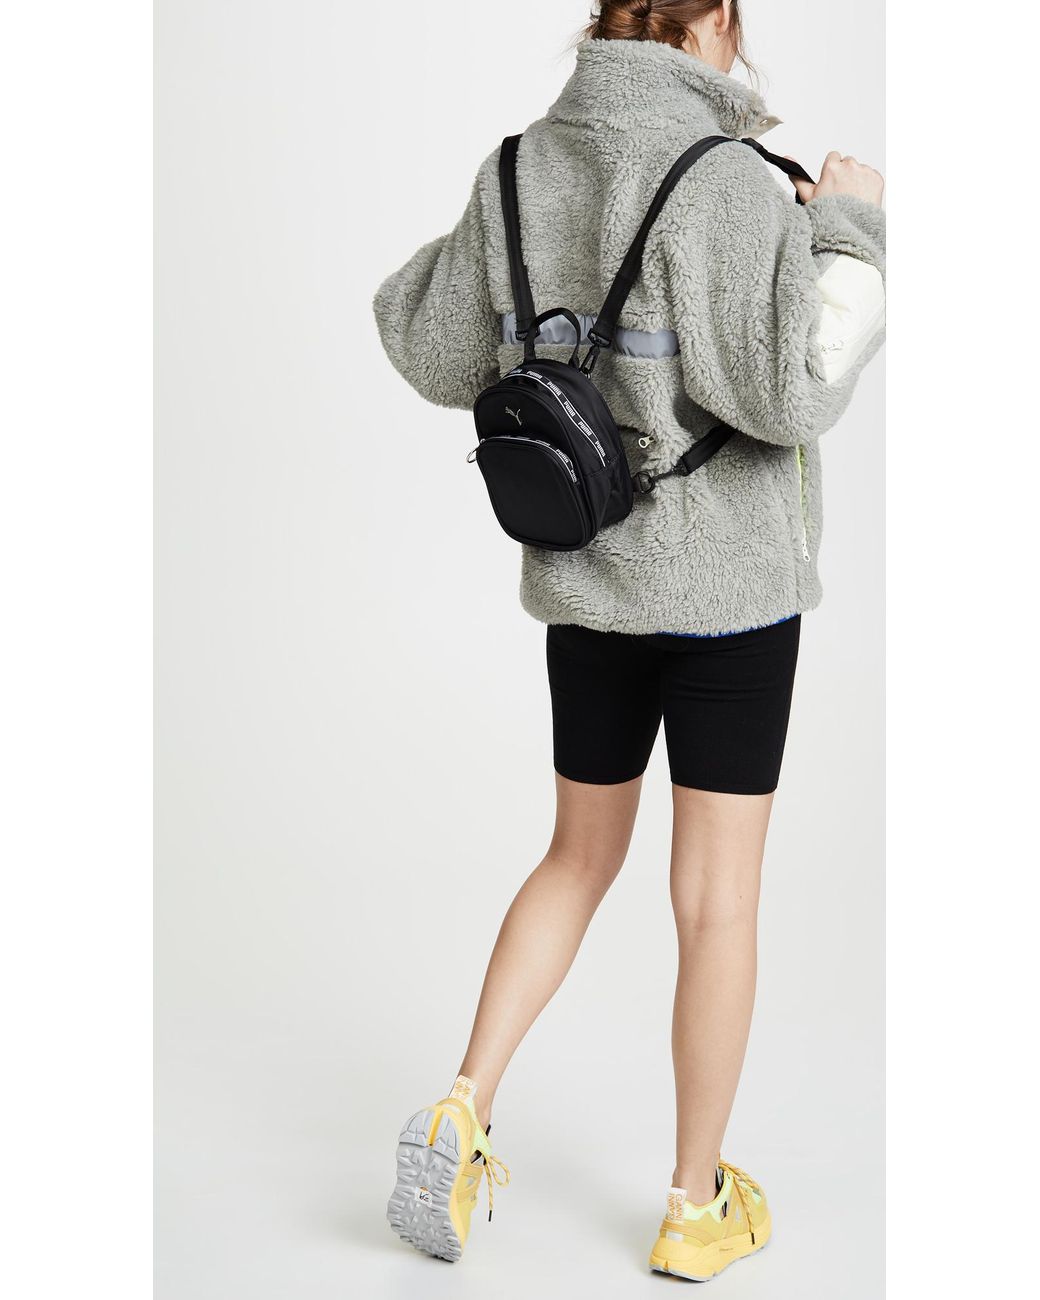 PUMA Mini Backpack in Black | Lyst